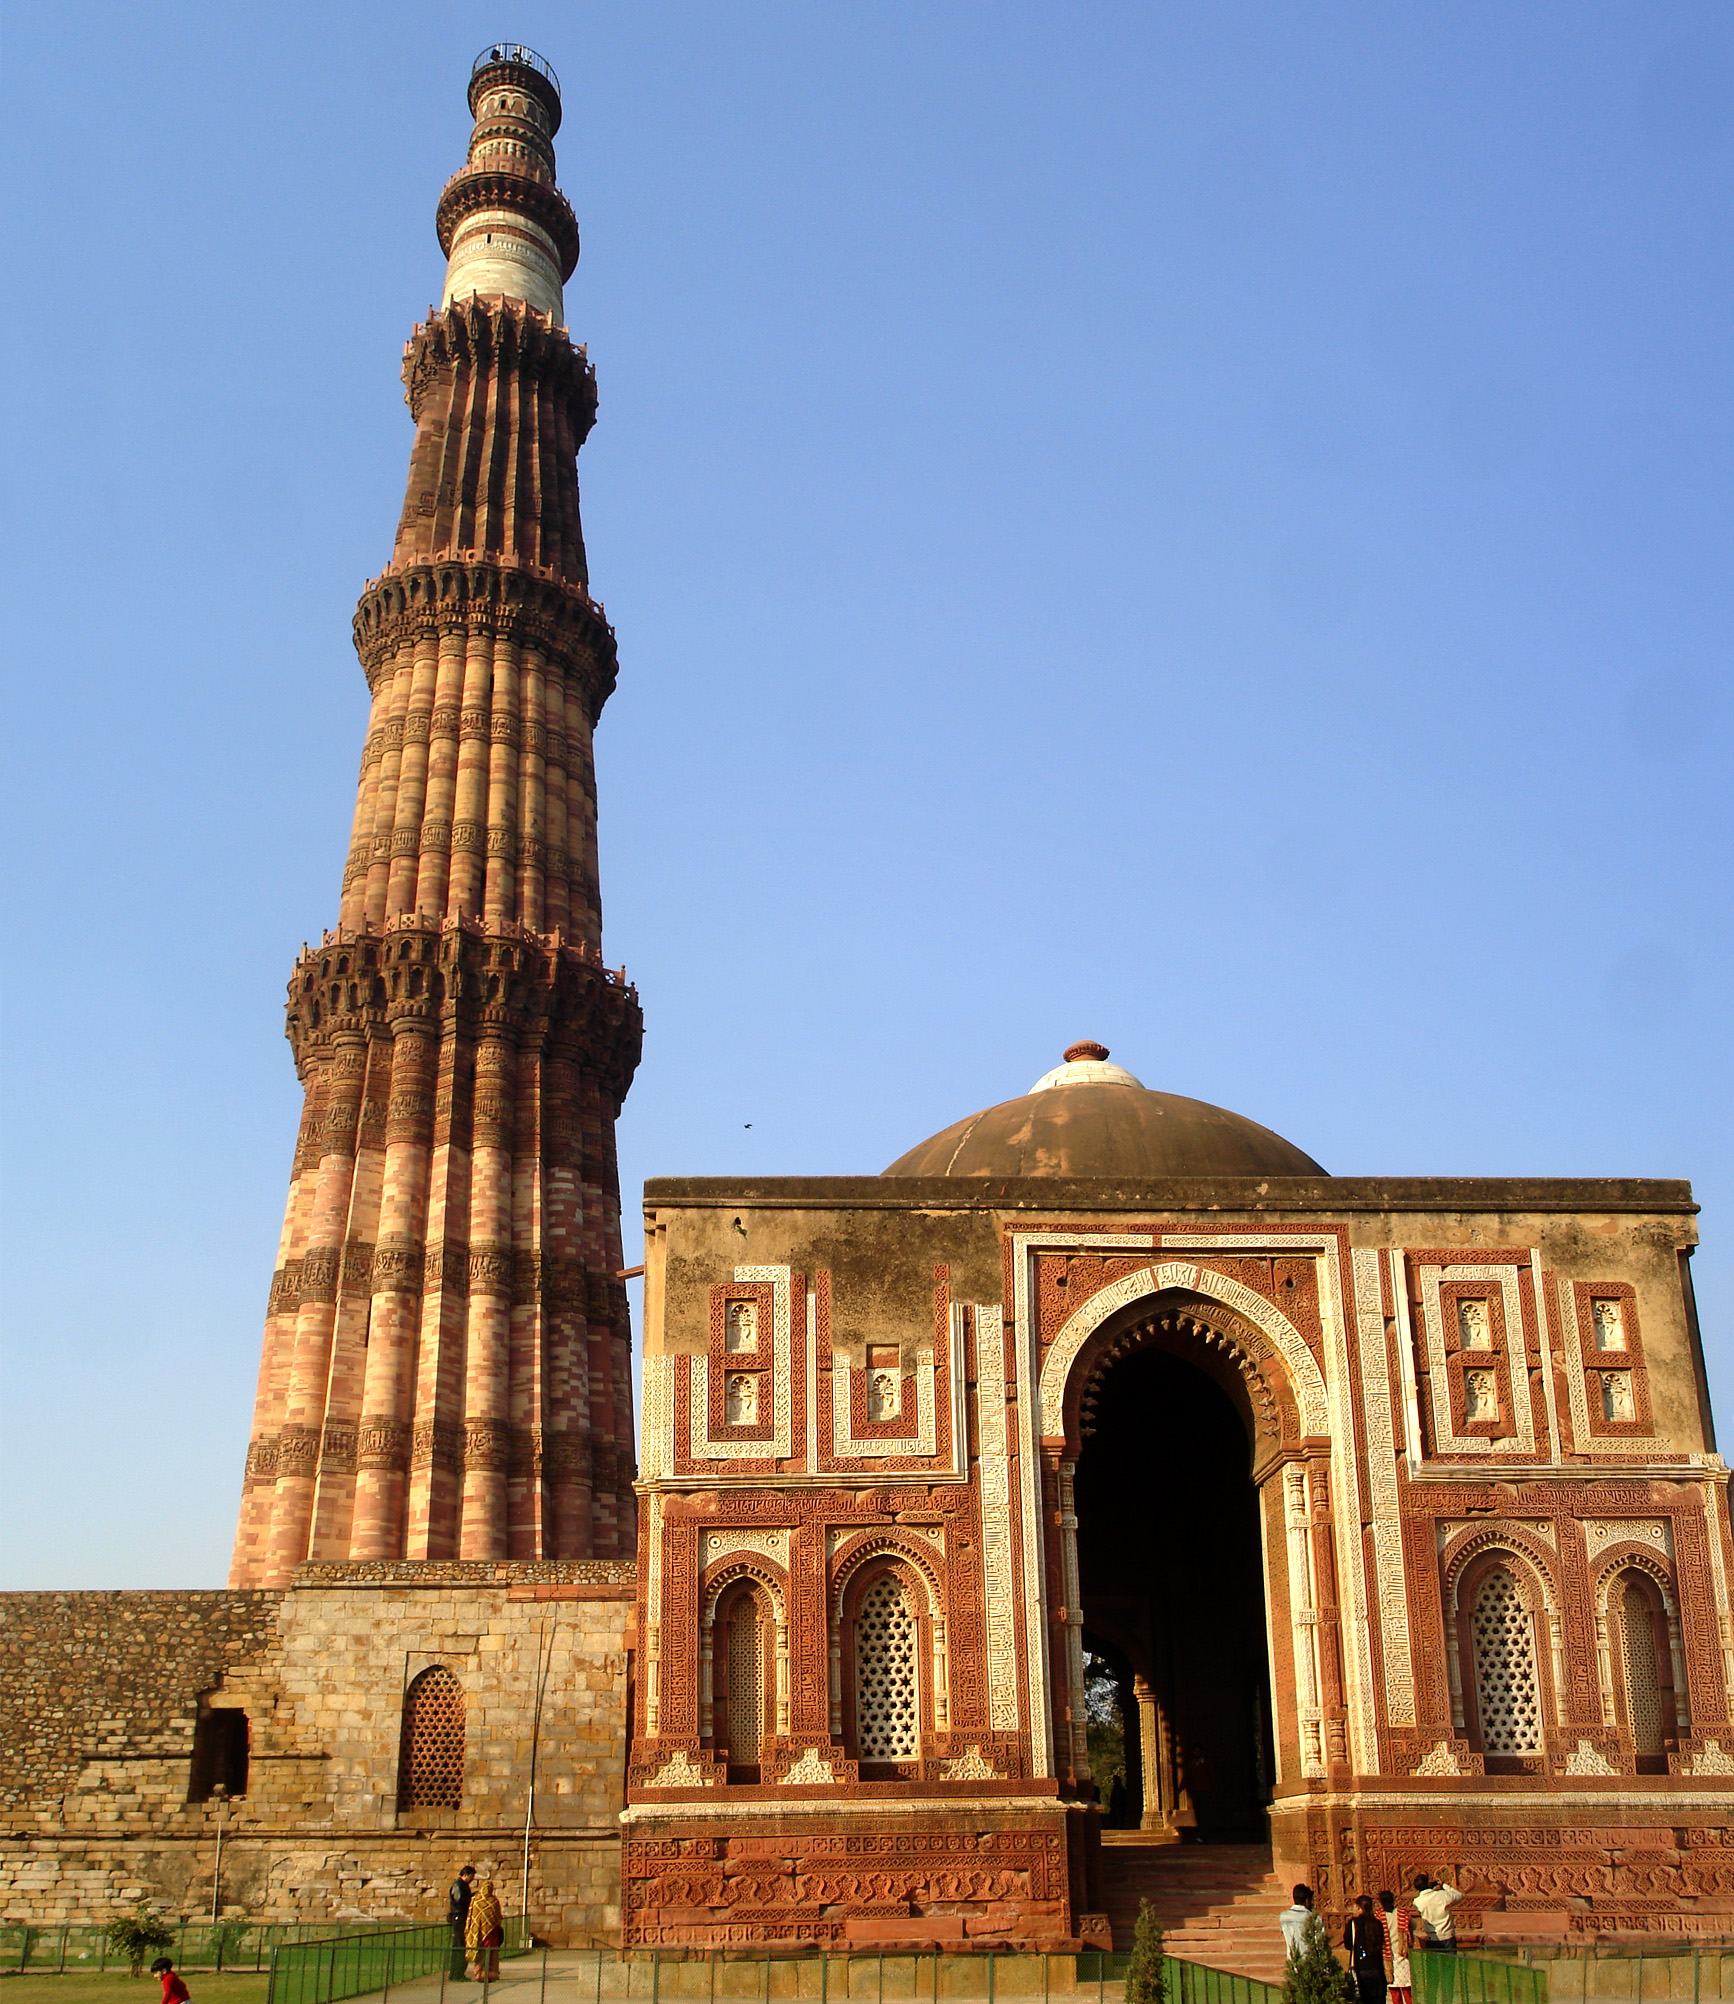 File:Qutab Minar mausoleum.jpg - Wikimedia Commons